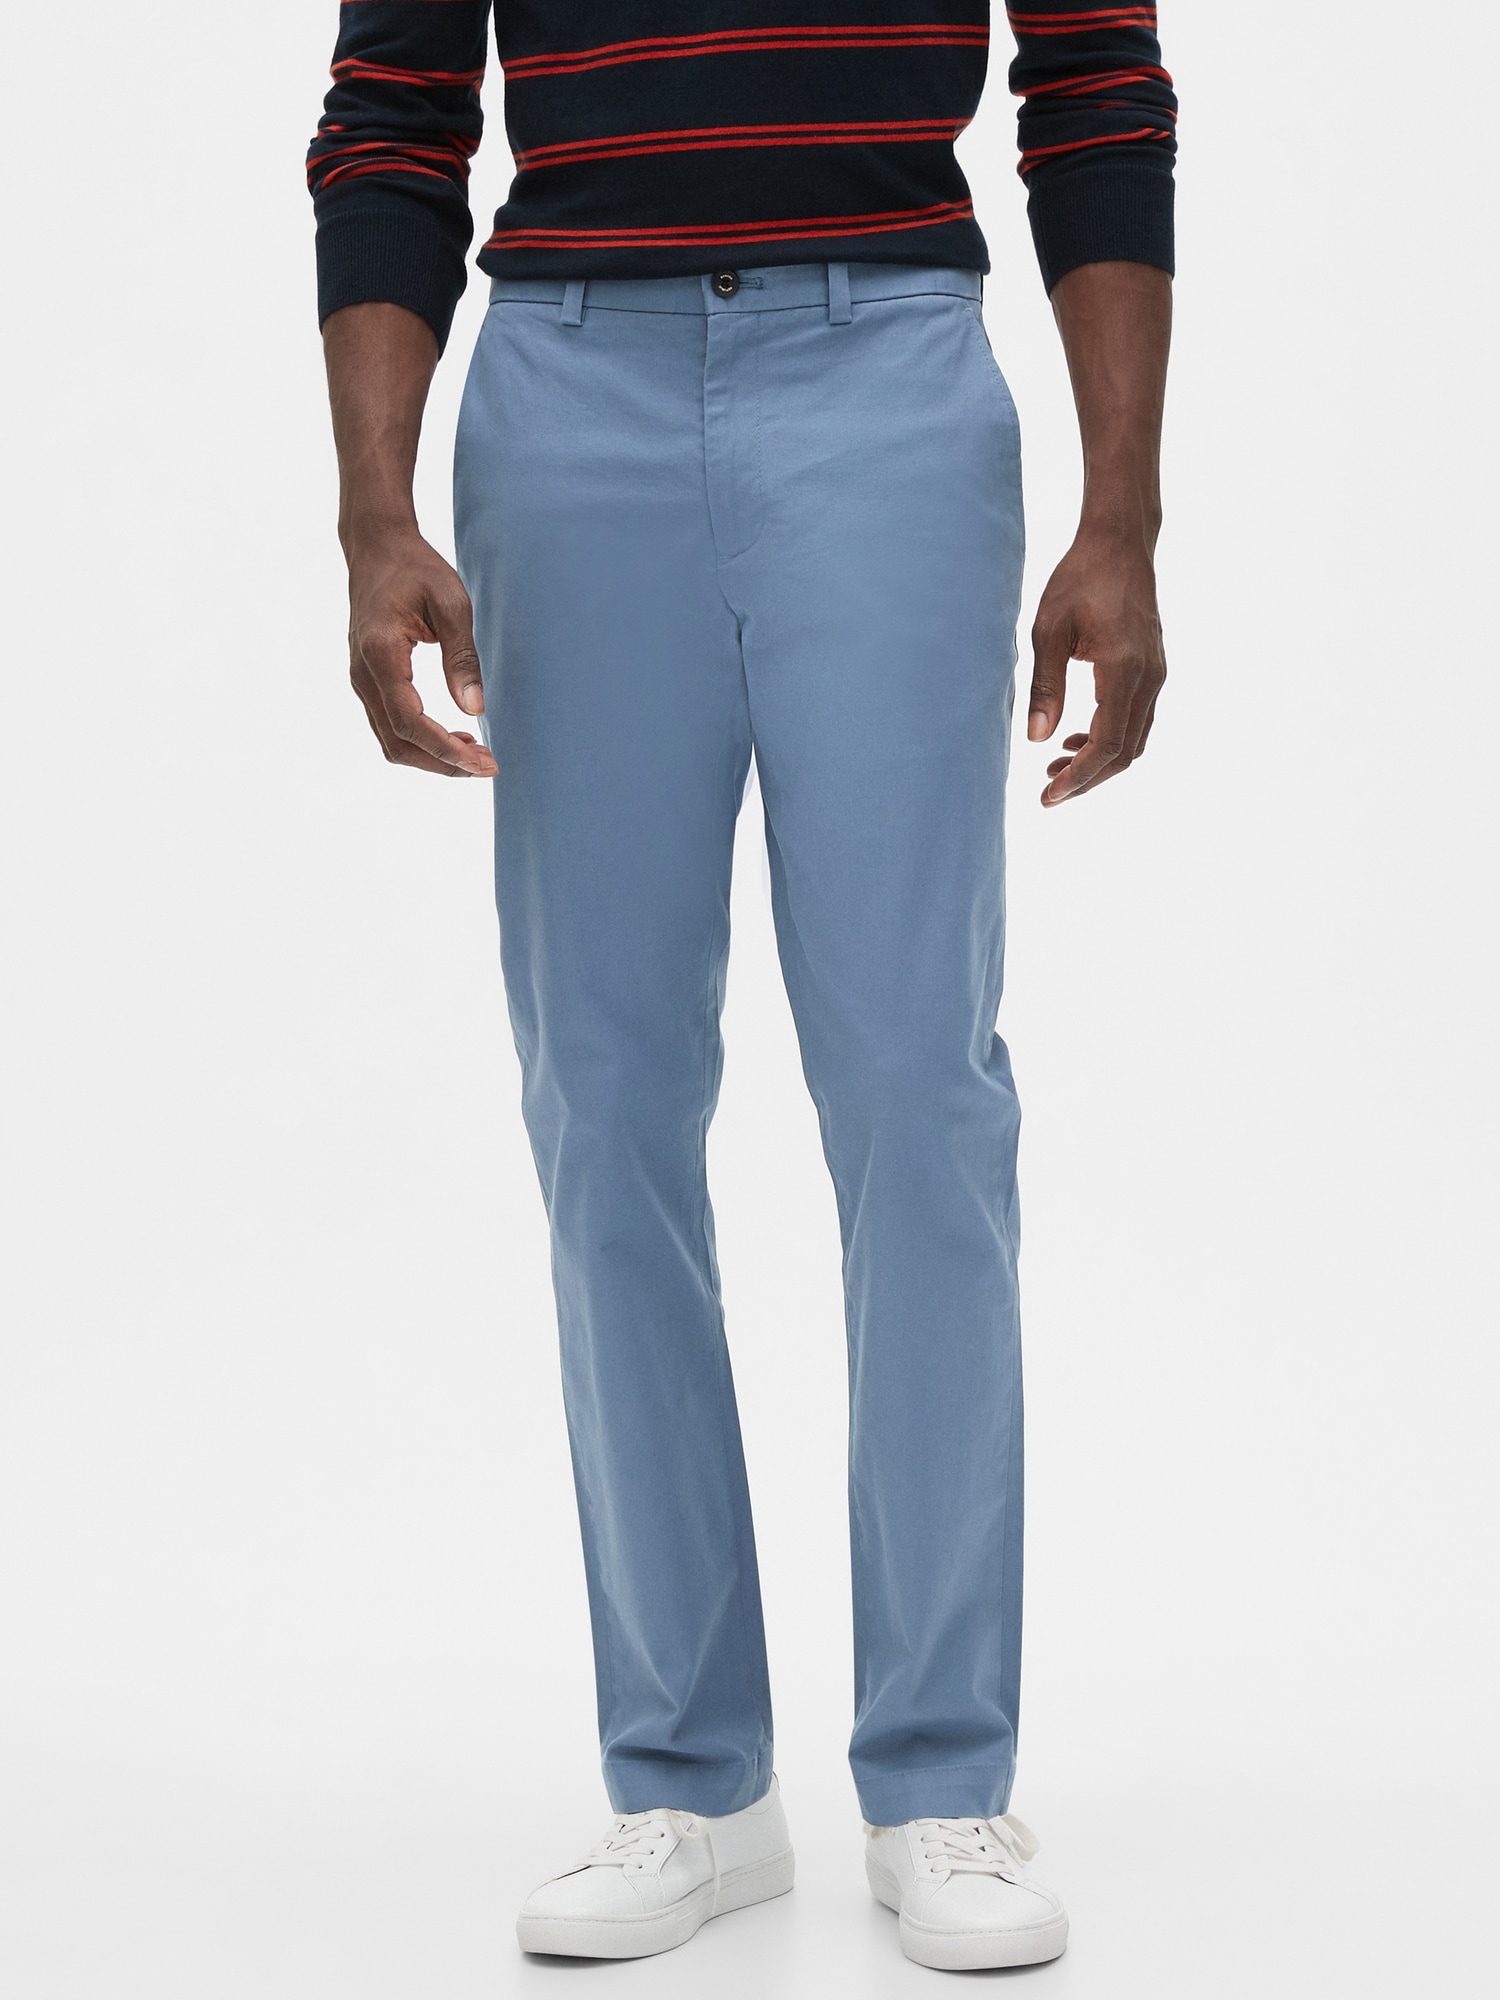 Banana Republic Men's Aiden Slim Fit Chino Pants 42 x 34 NWT Gray